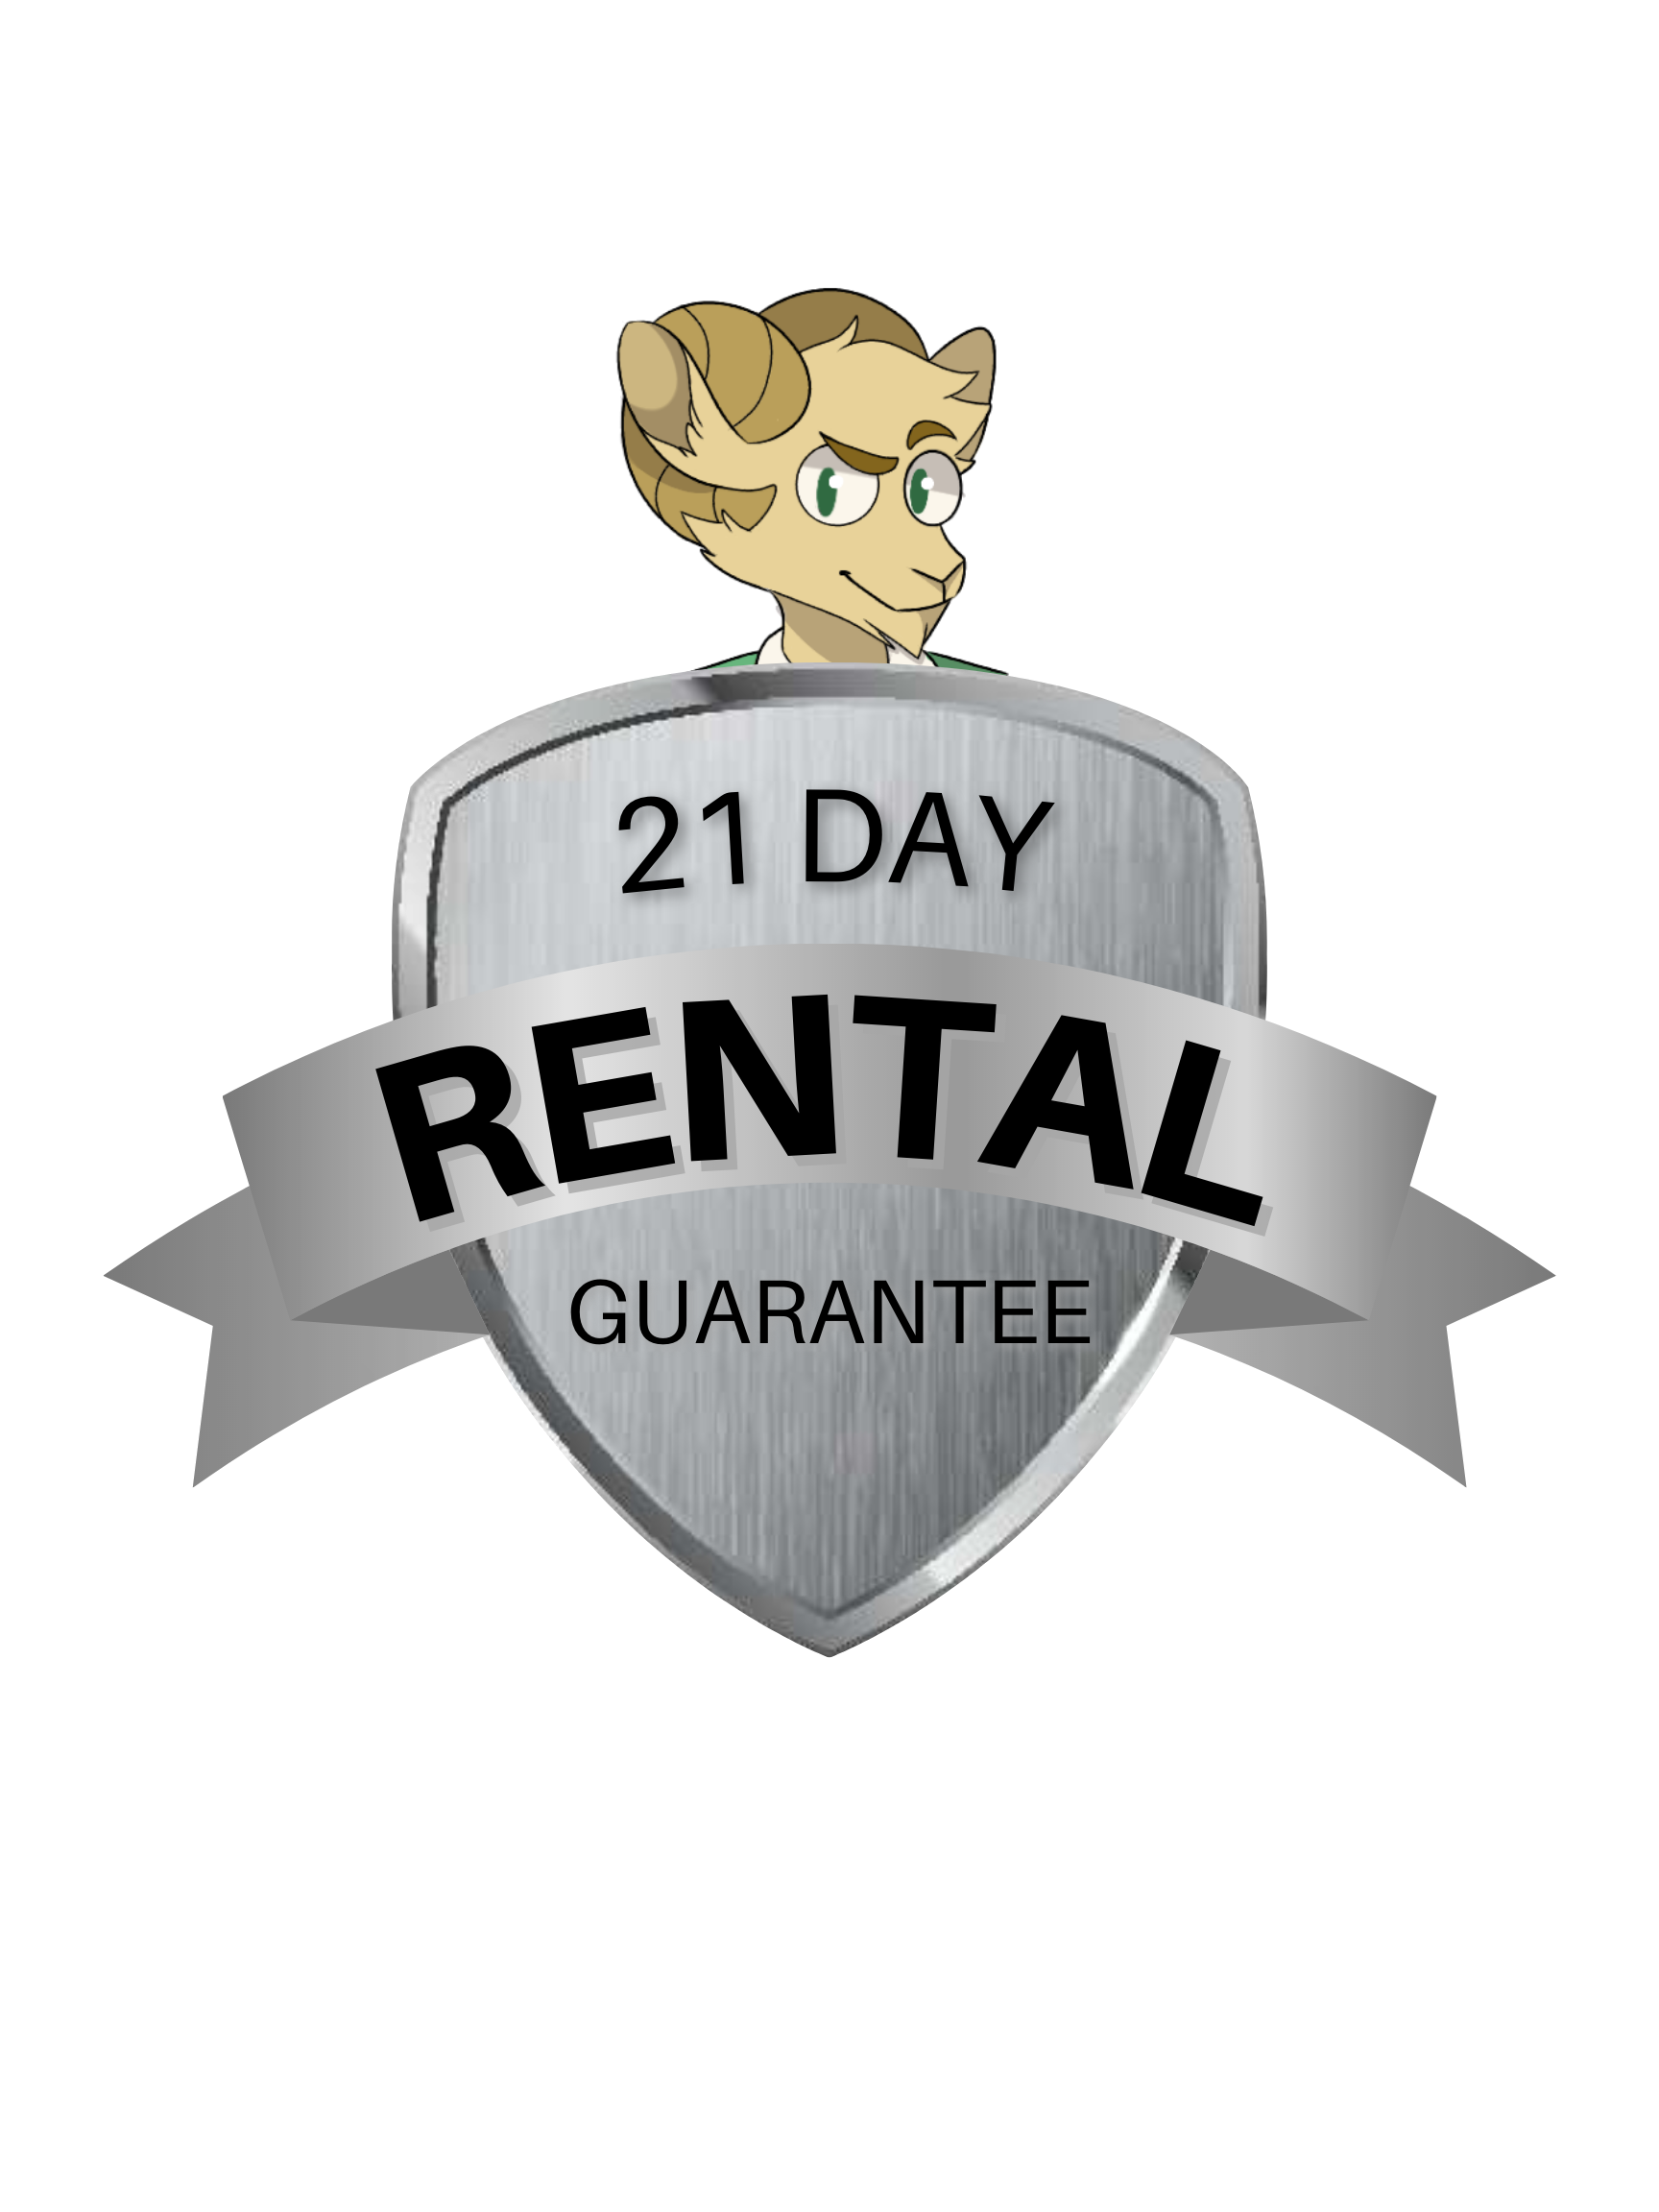 21 Day Rental Guarantee